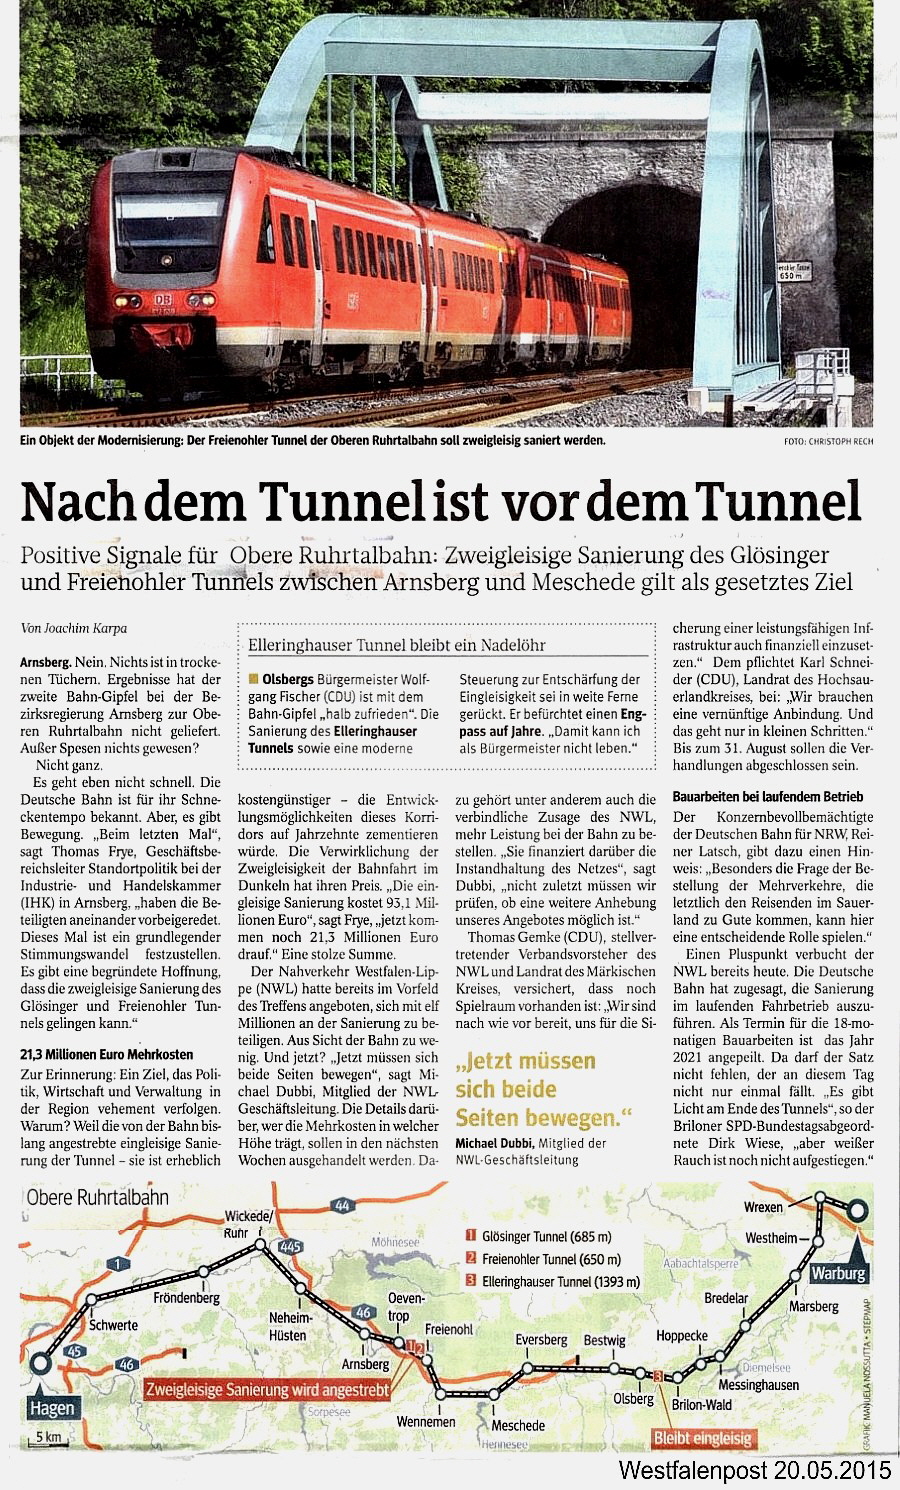 Tunnel 20.05.15